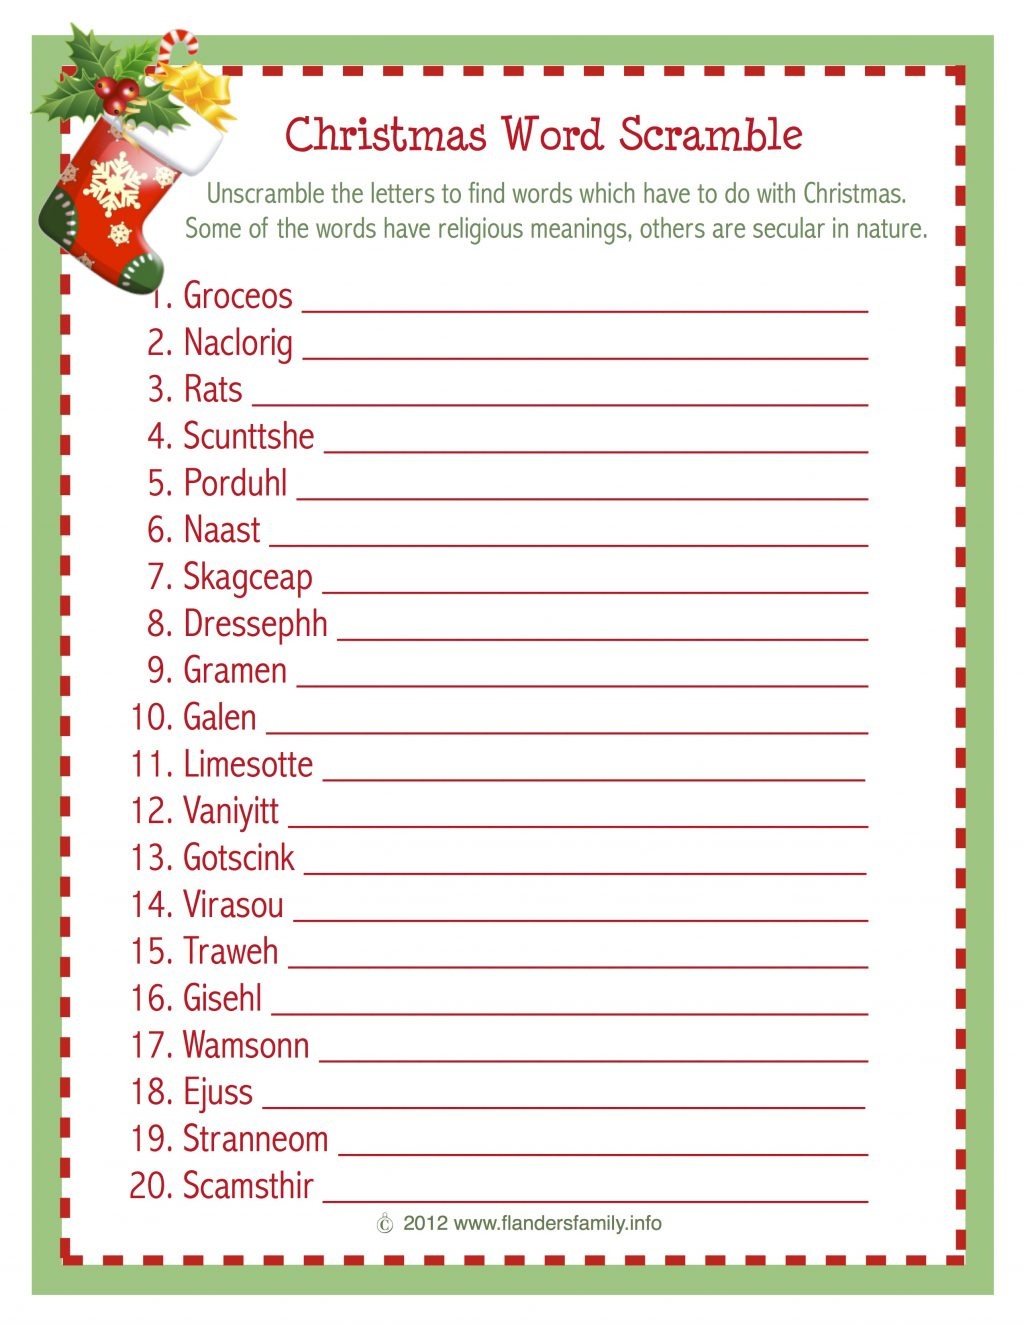 Christmas Word Scramble (Free Printable) - Flanders Family Homelife - Free Printable Christmas Puzzle Games